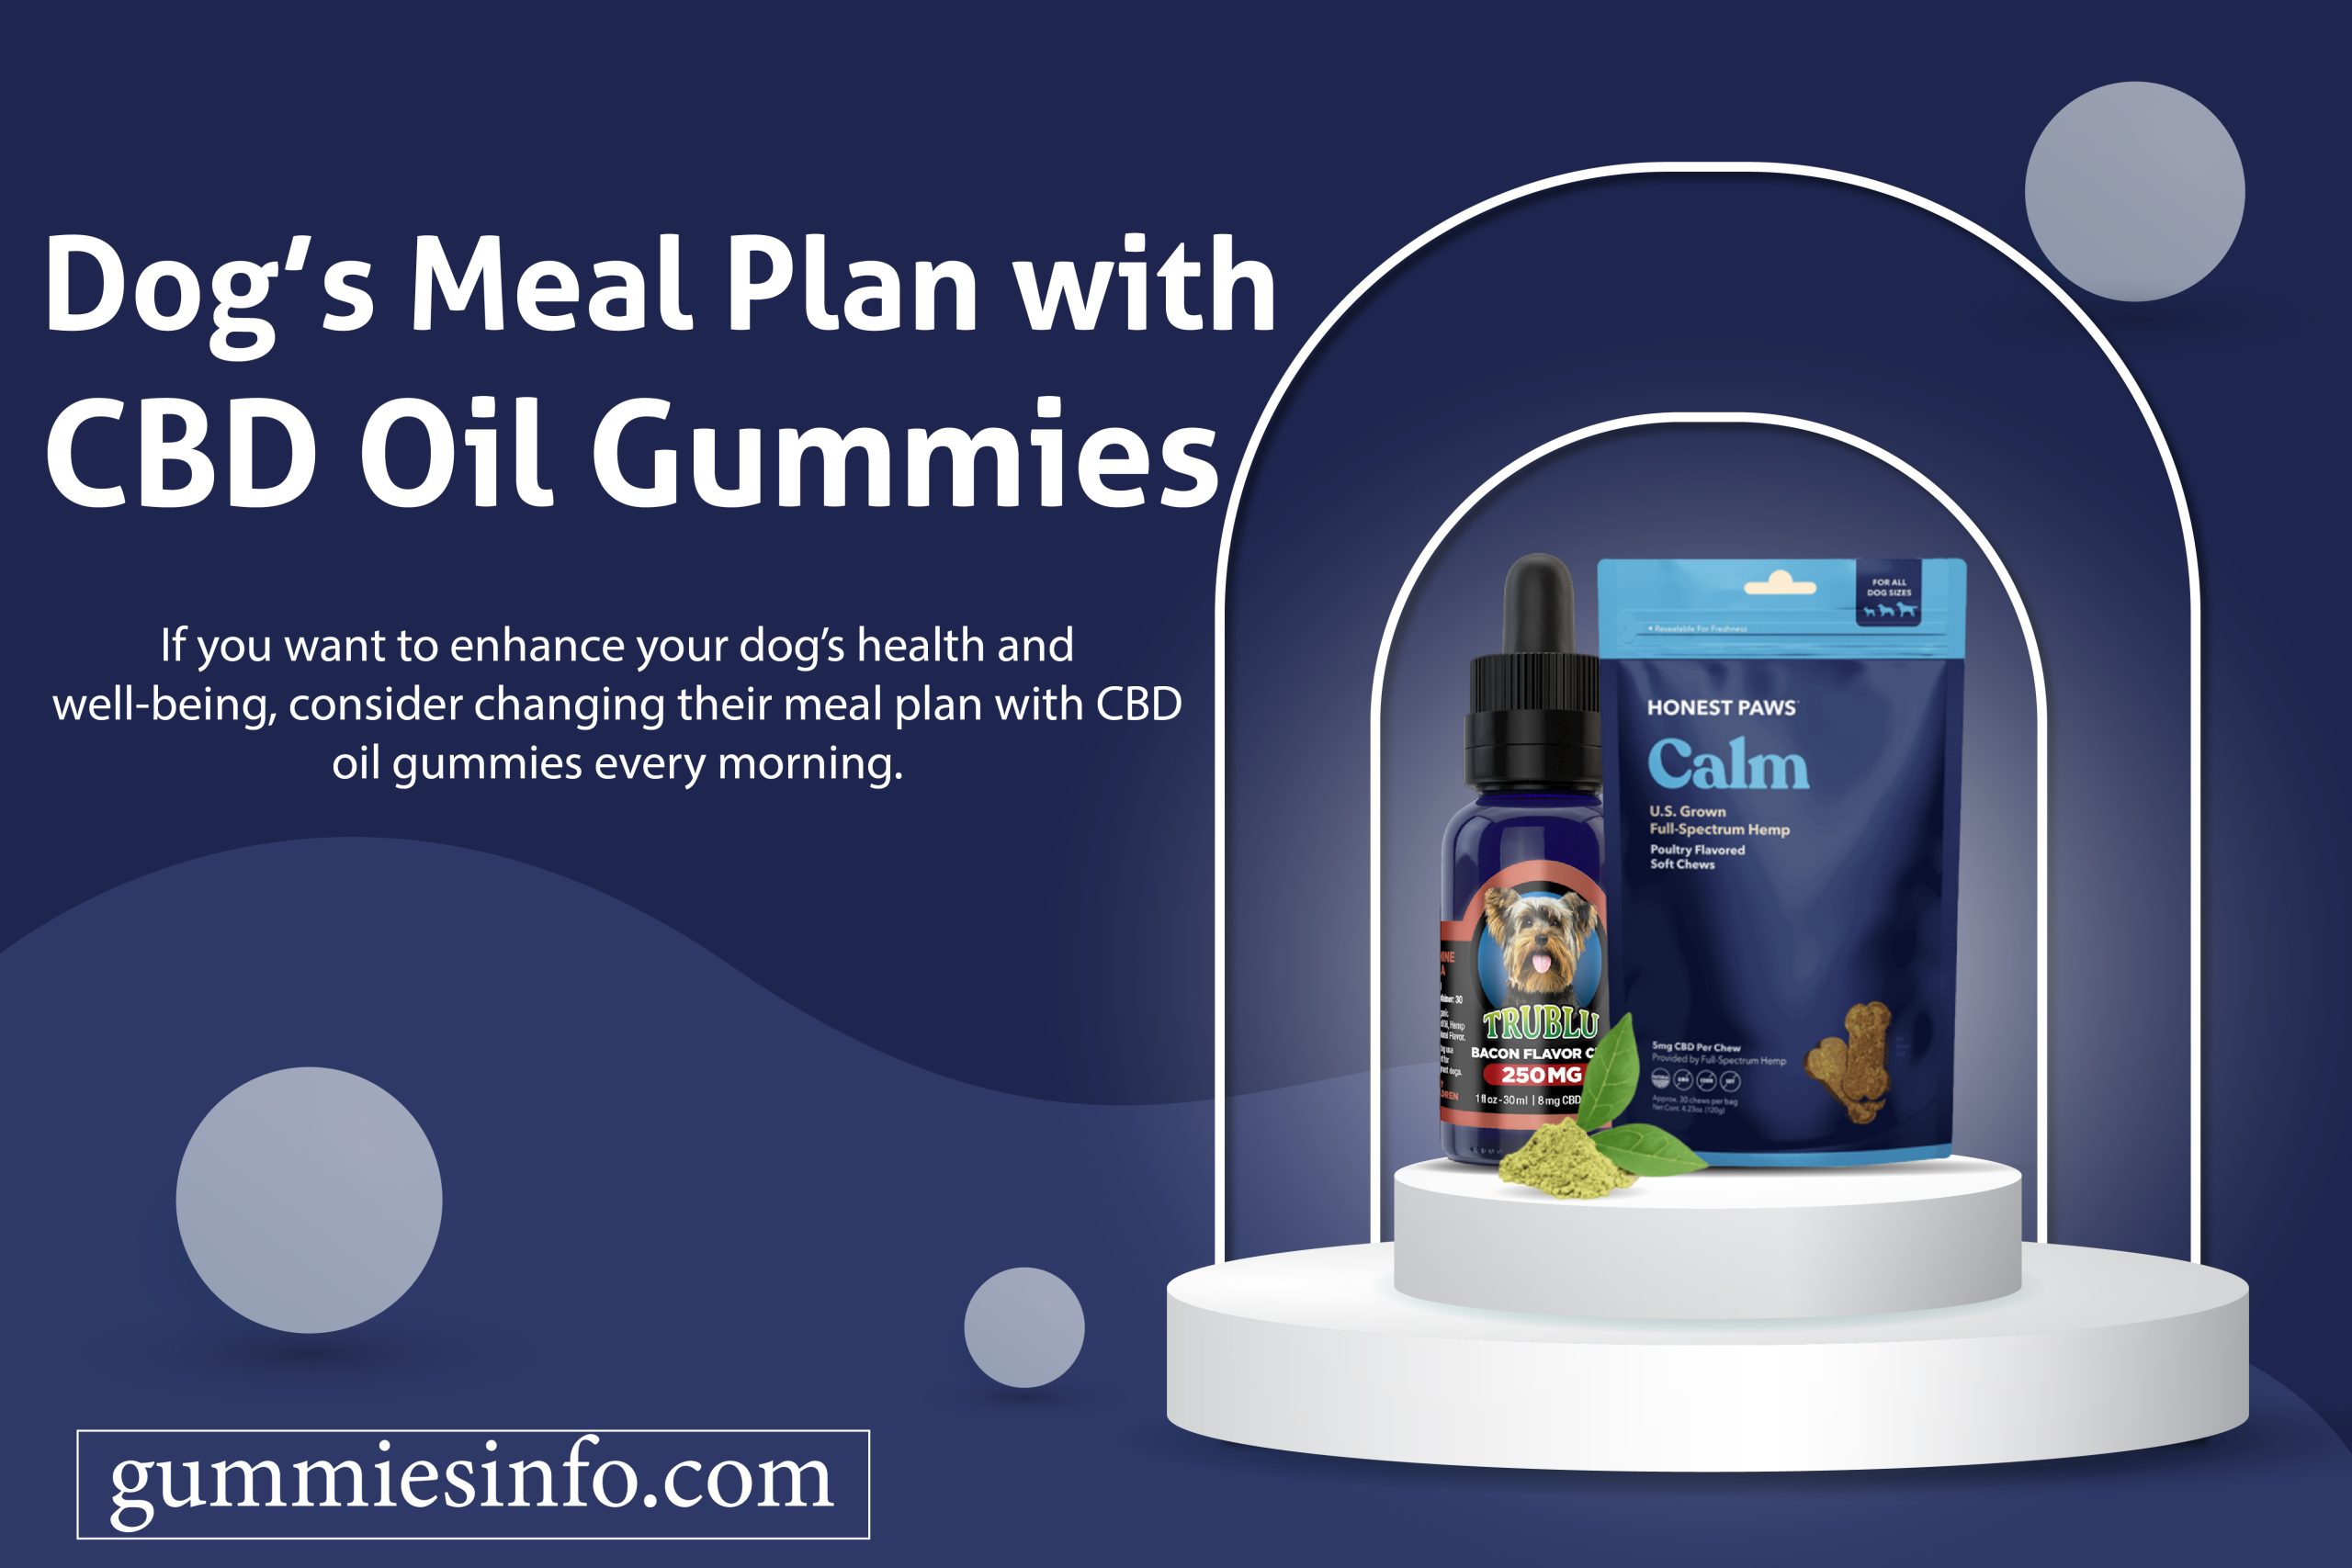 Dog’s Meal Plan with CBD Oil Gummies